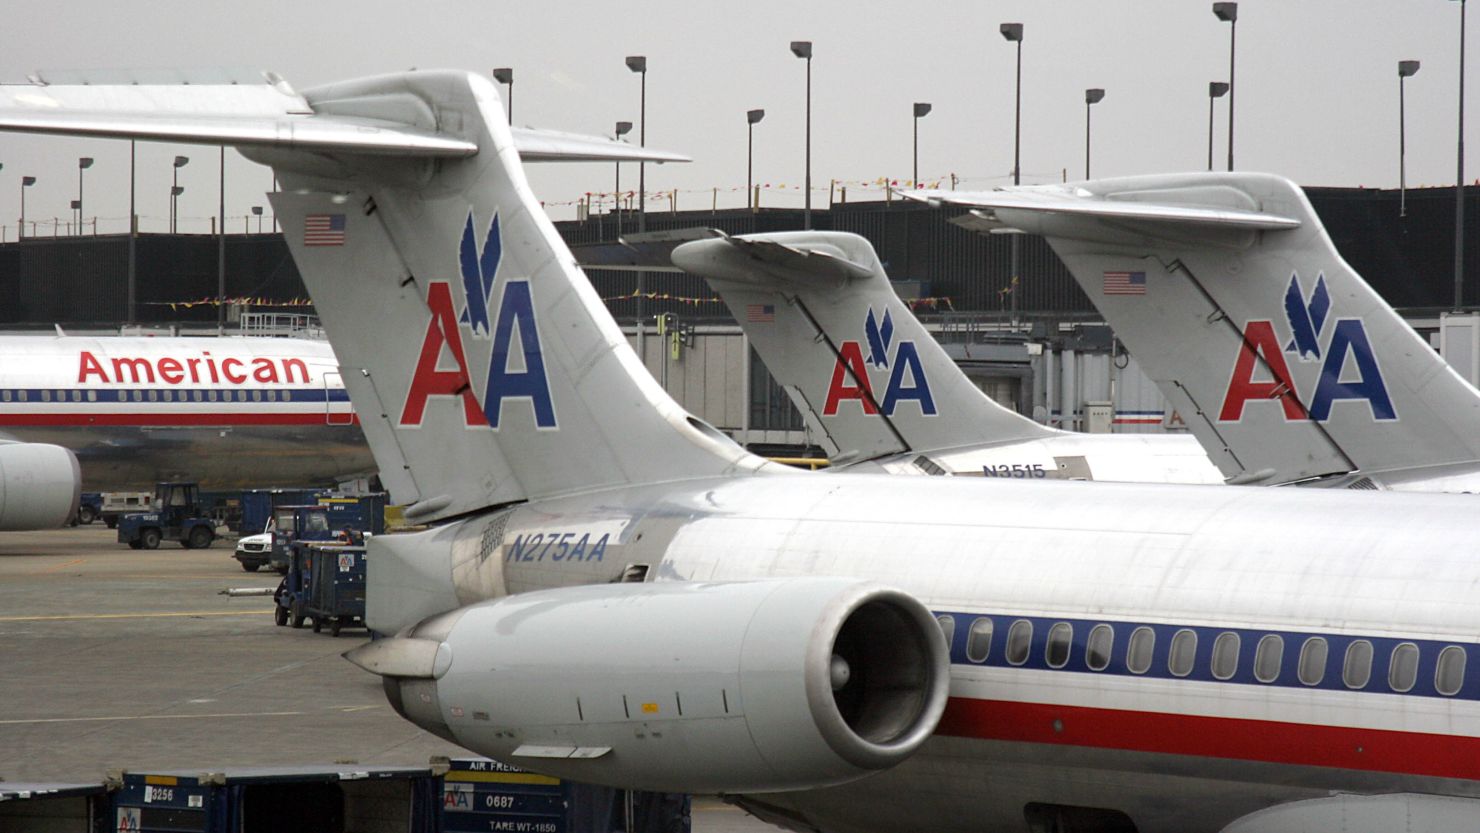 Flight attendants were hurt after turbulence on an American Airlines flight.